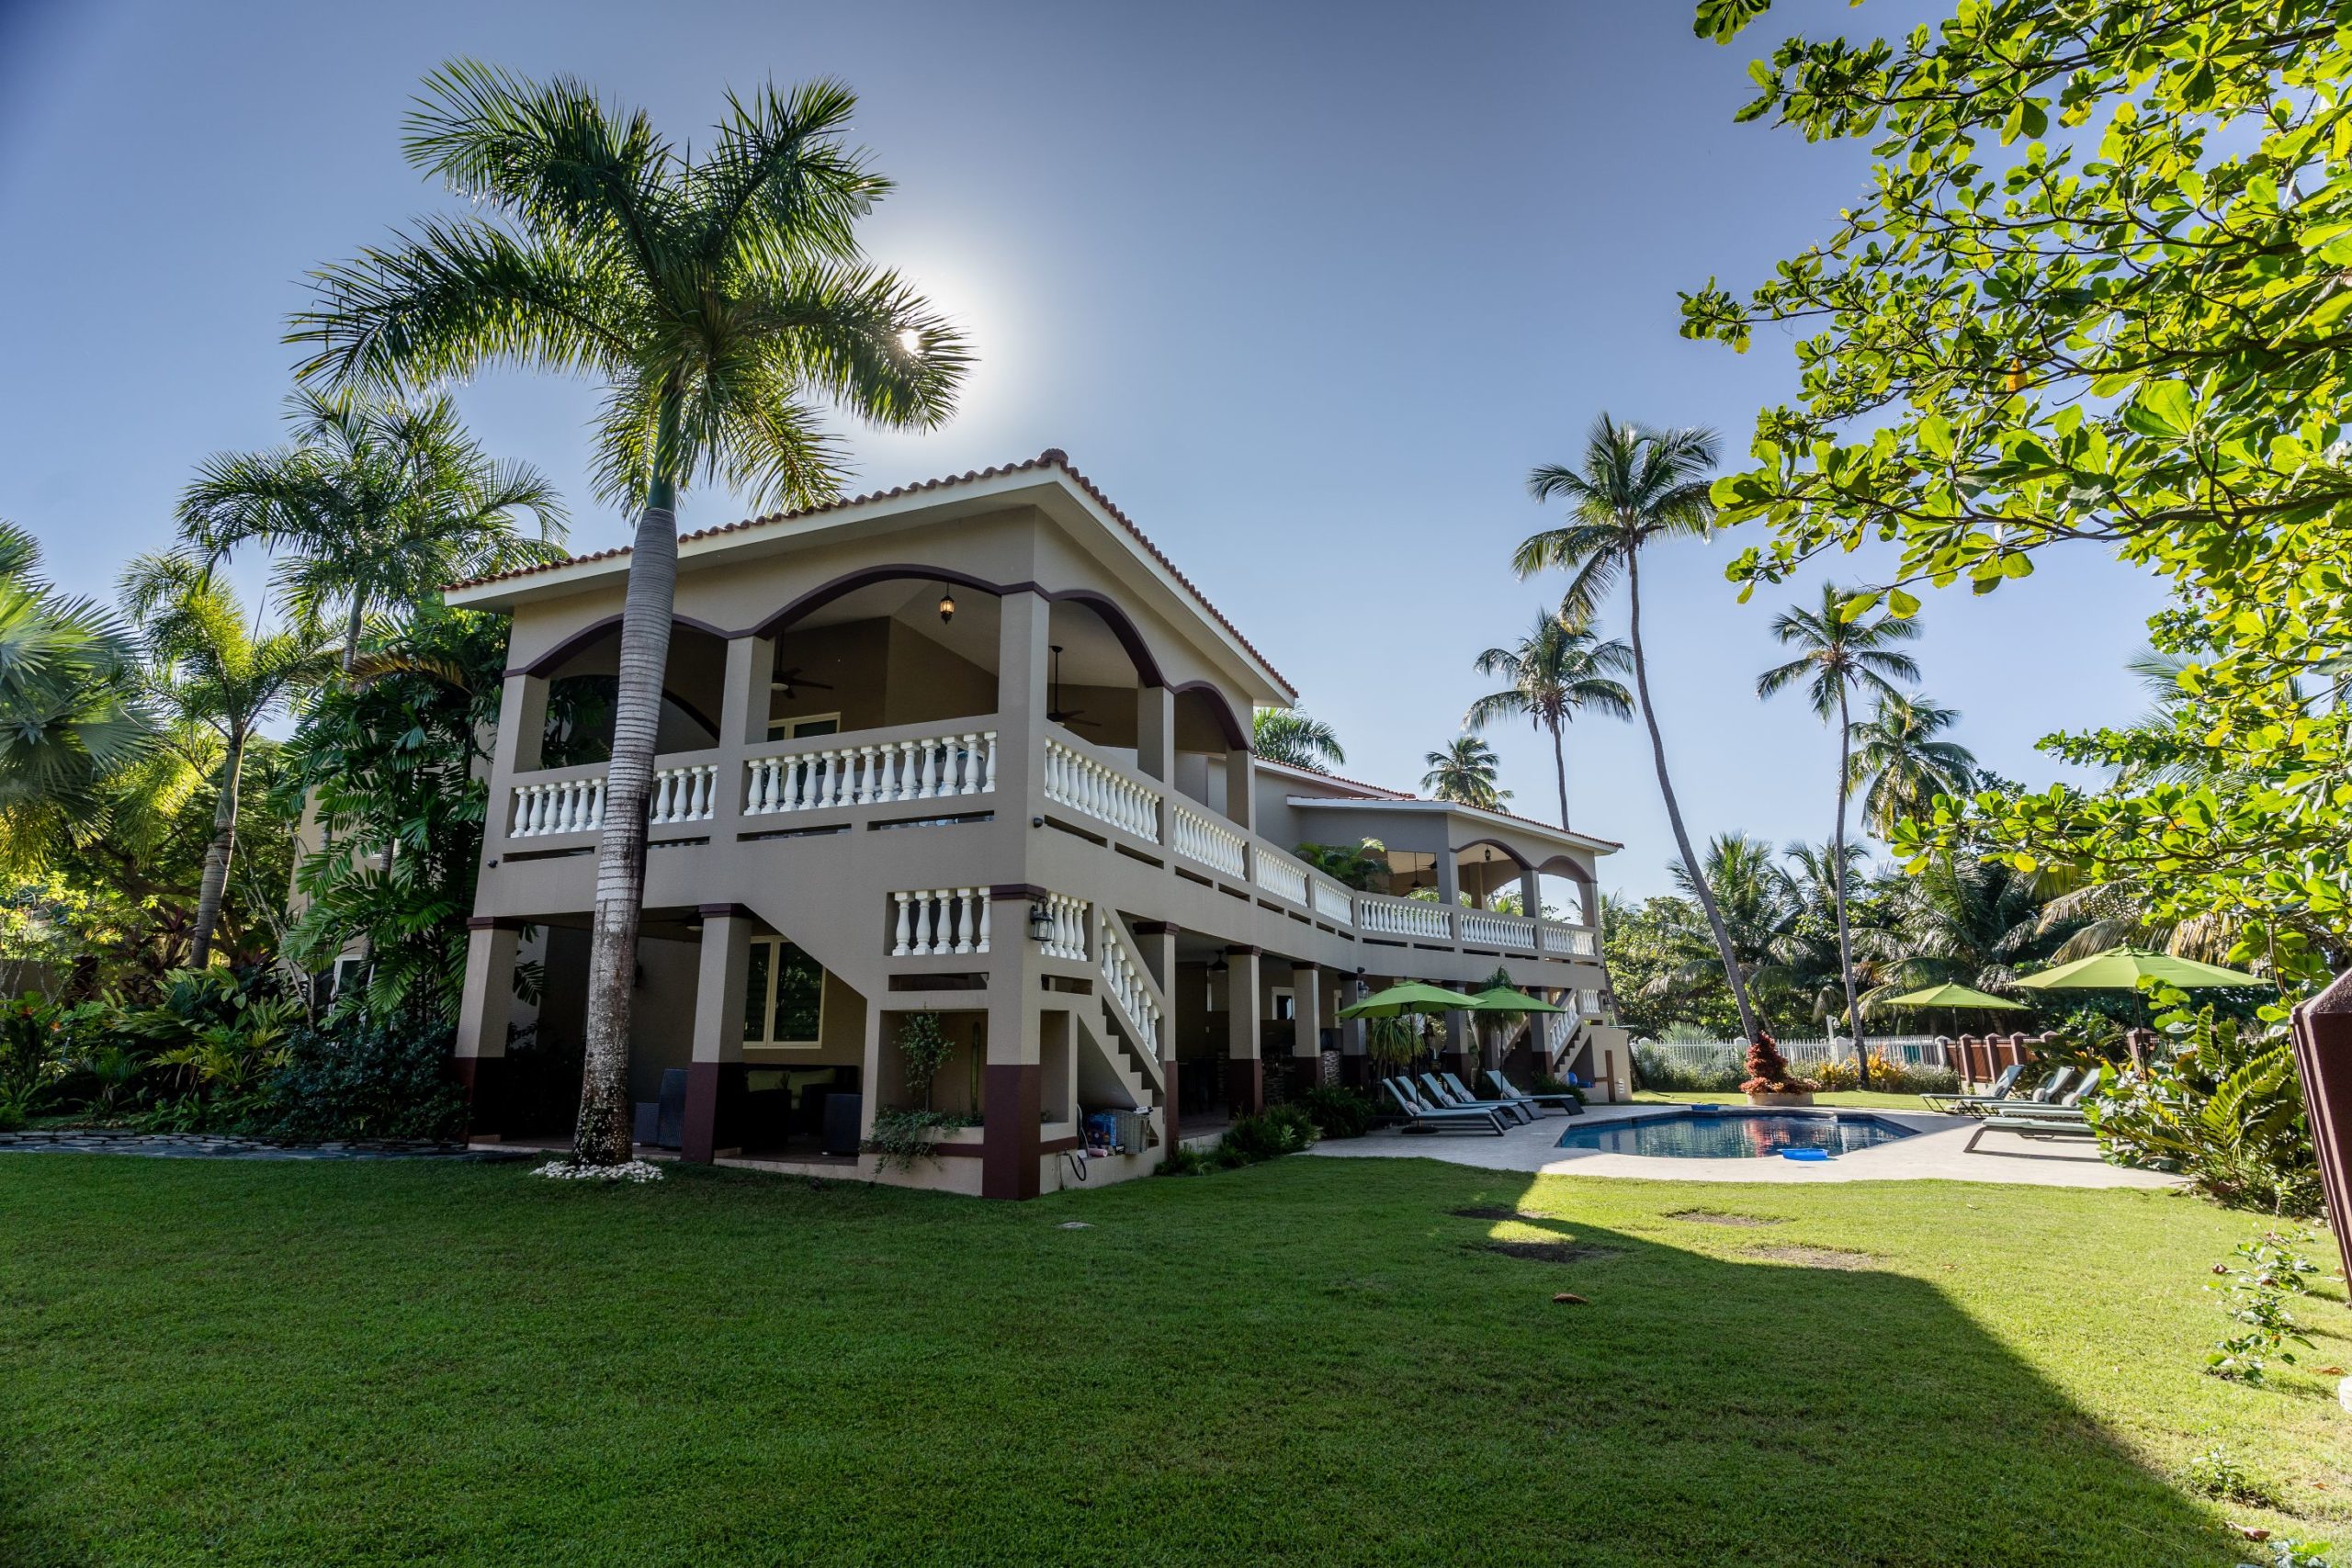 Side yard view of Maria's Villa in Puerto Rico.